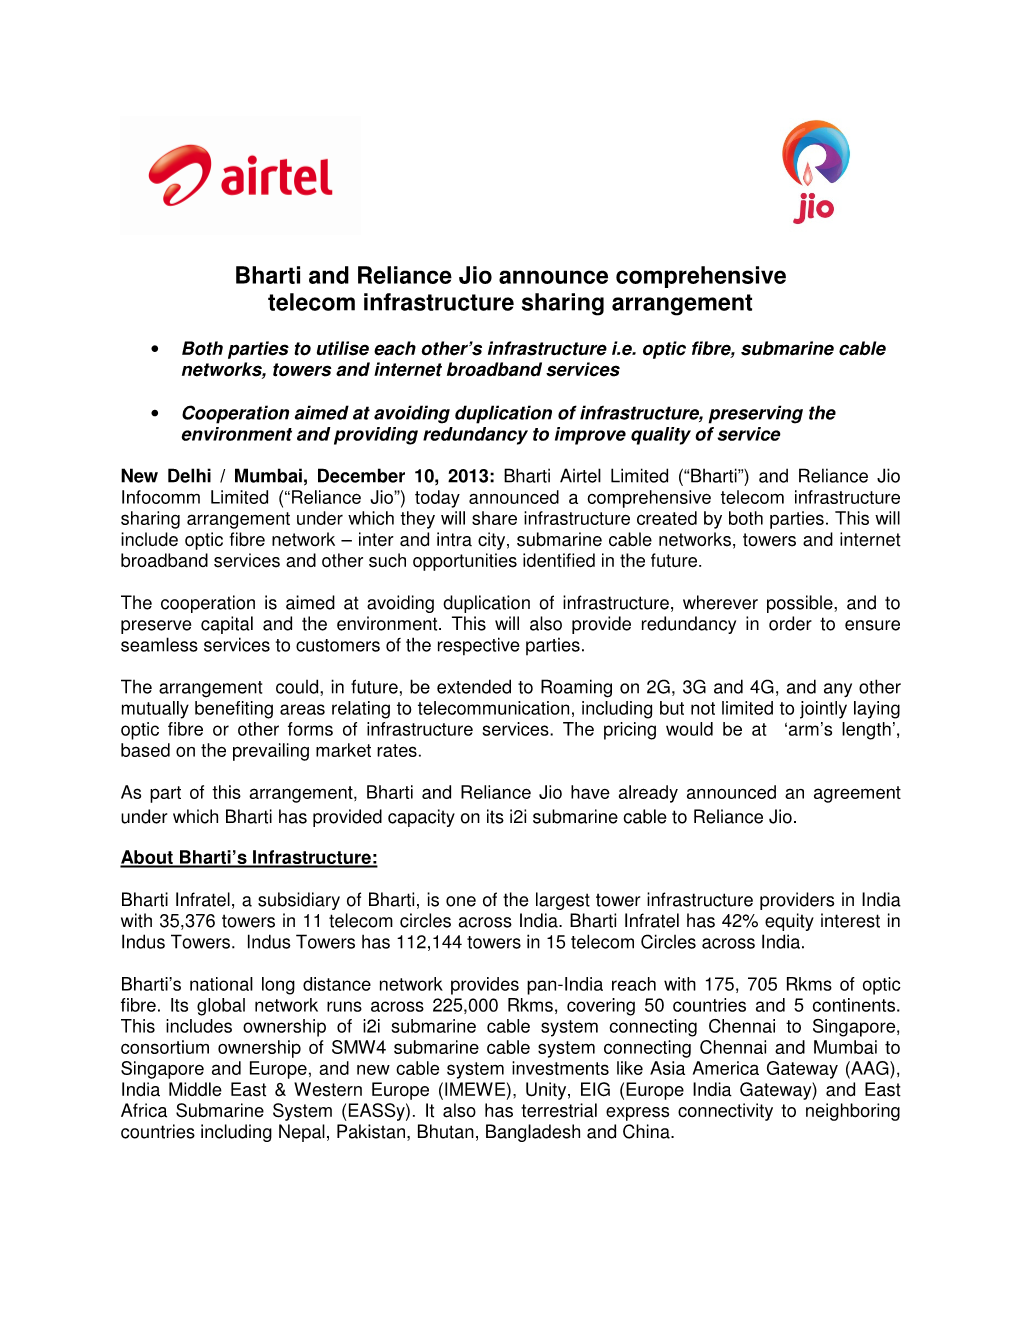 Bharti and Reliance Jio Announce Comprehensive Telecom Infrastructure Sharing Arrangement